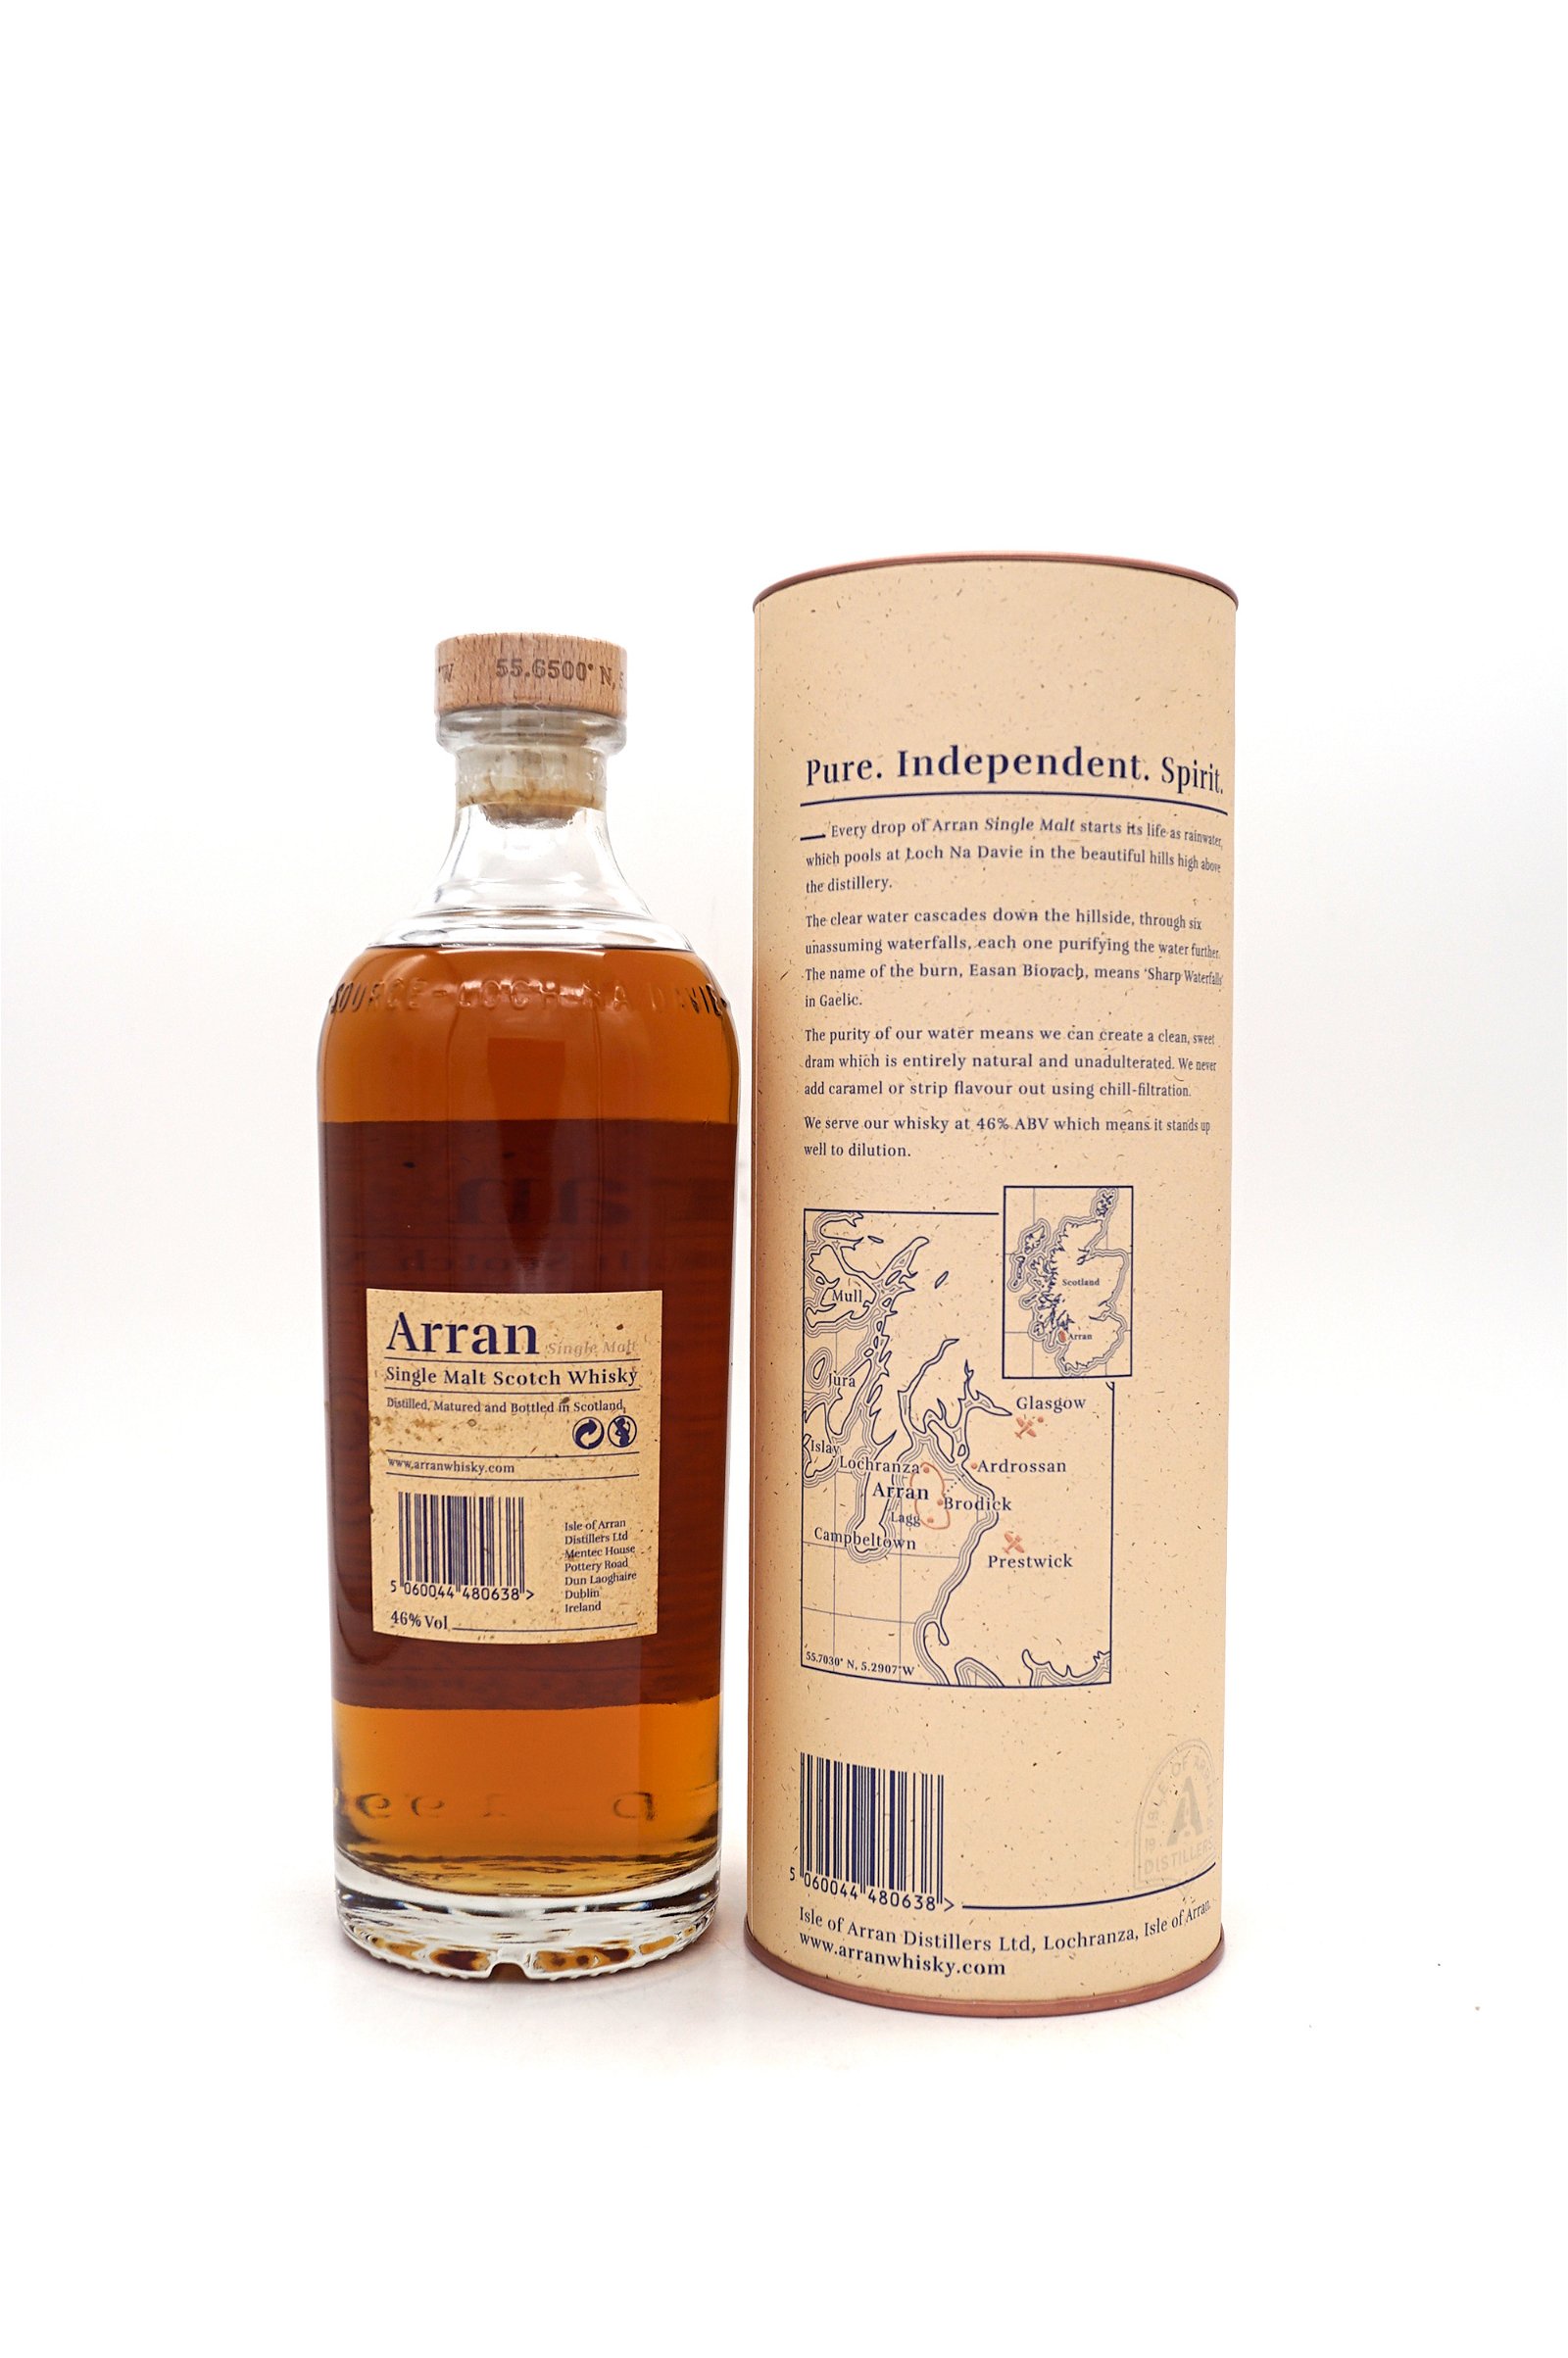 The Arran 10 Jahre Single Malt Scotch Whisky